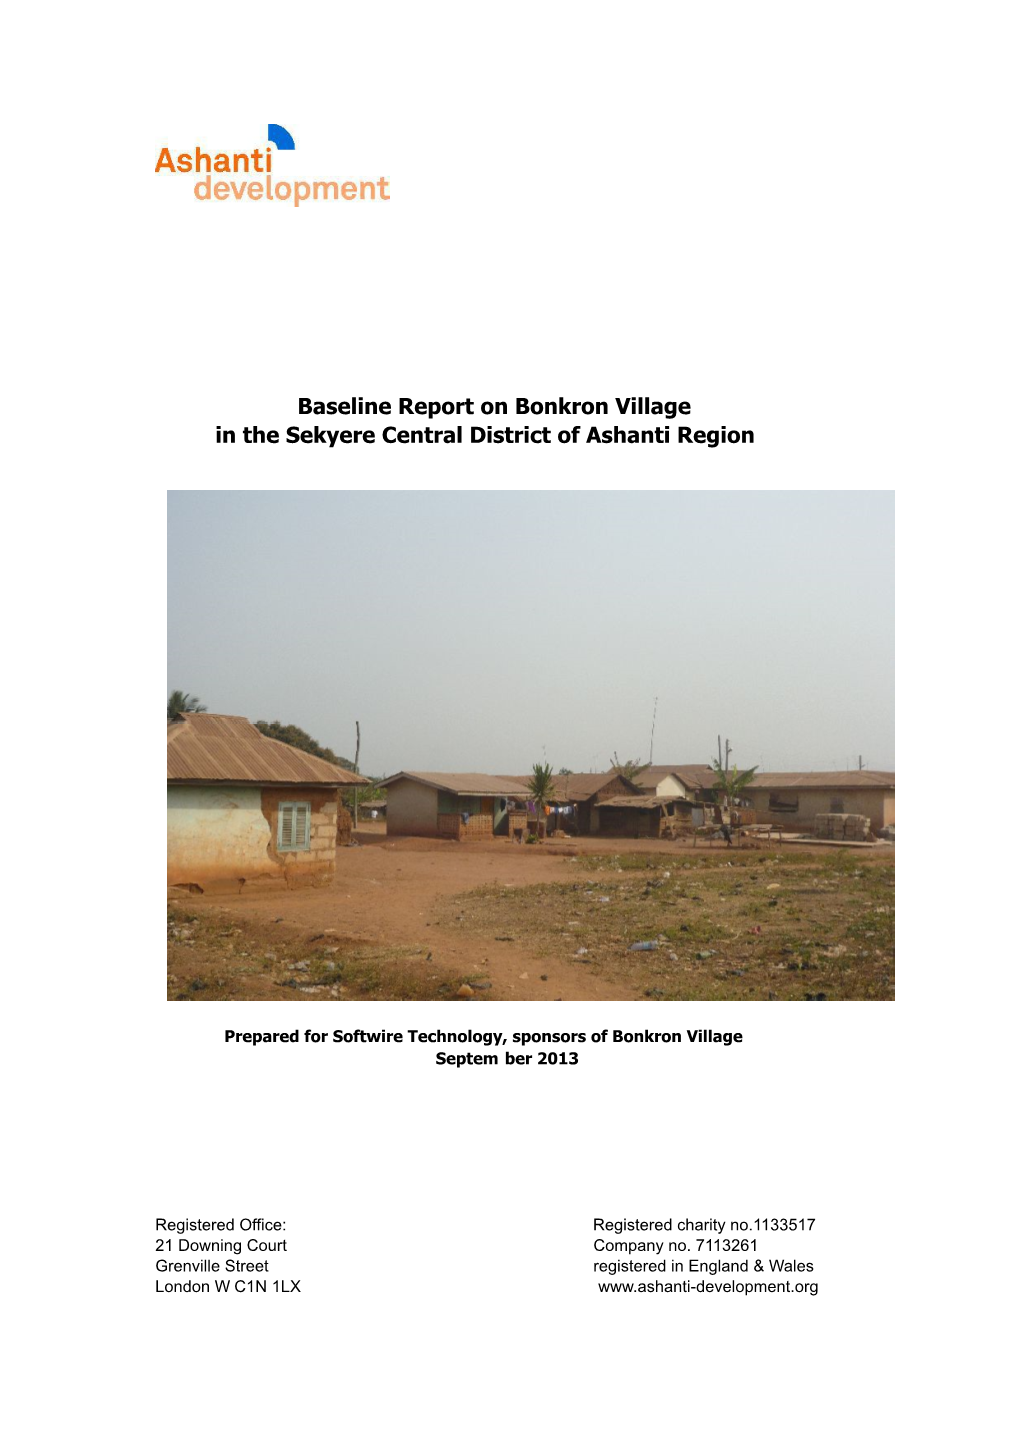 Baseline Report on Bonkron Village in the Sekyere Central District of Ashanti Region